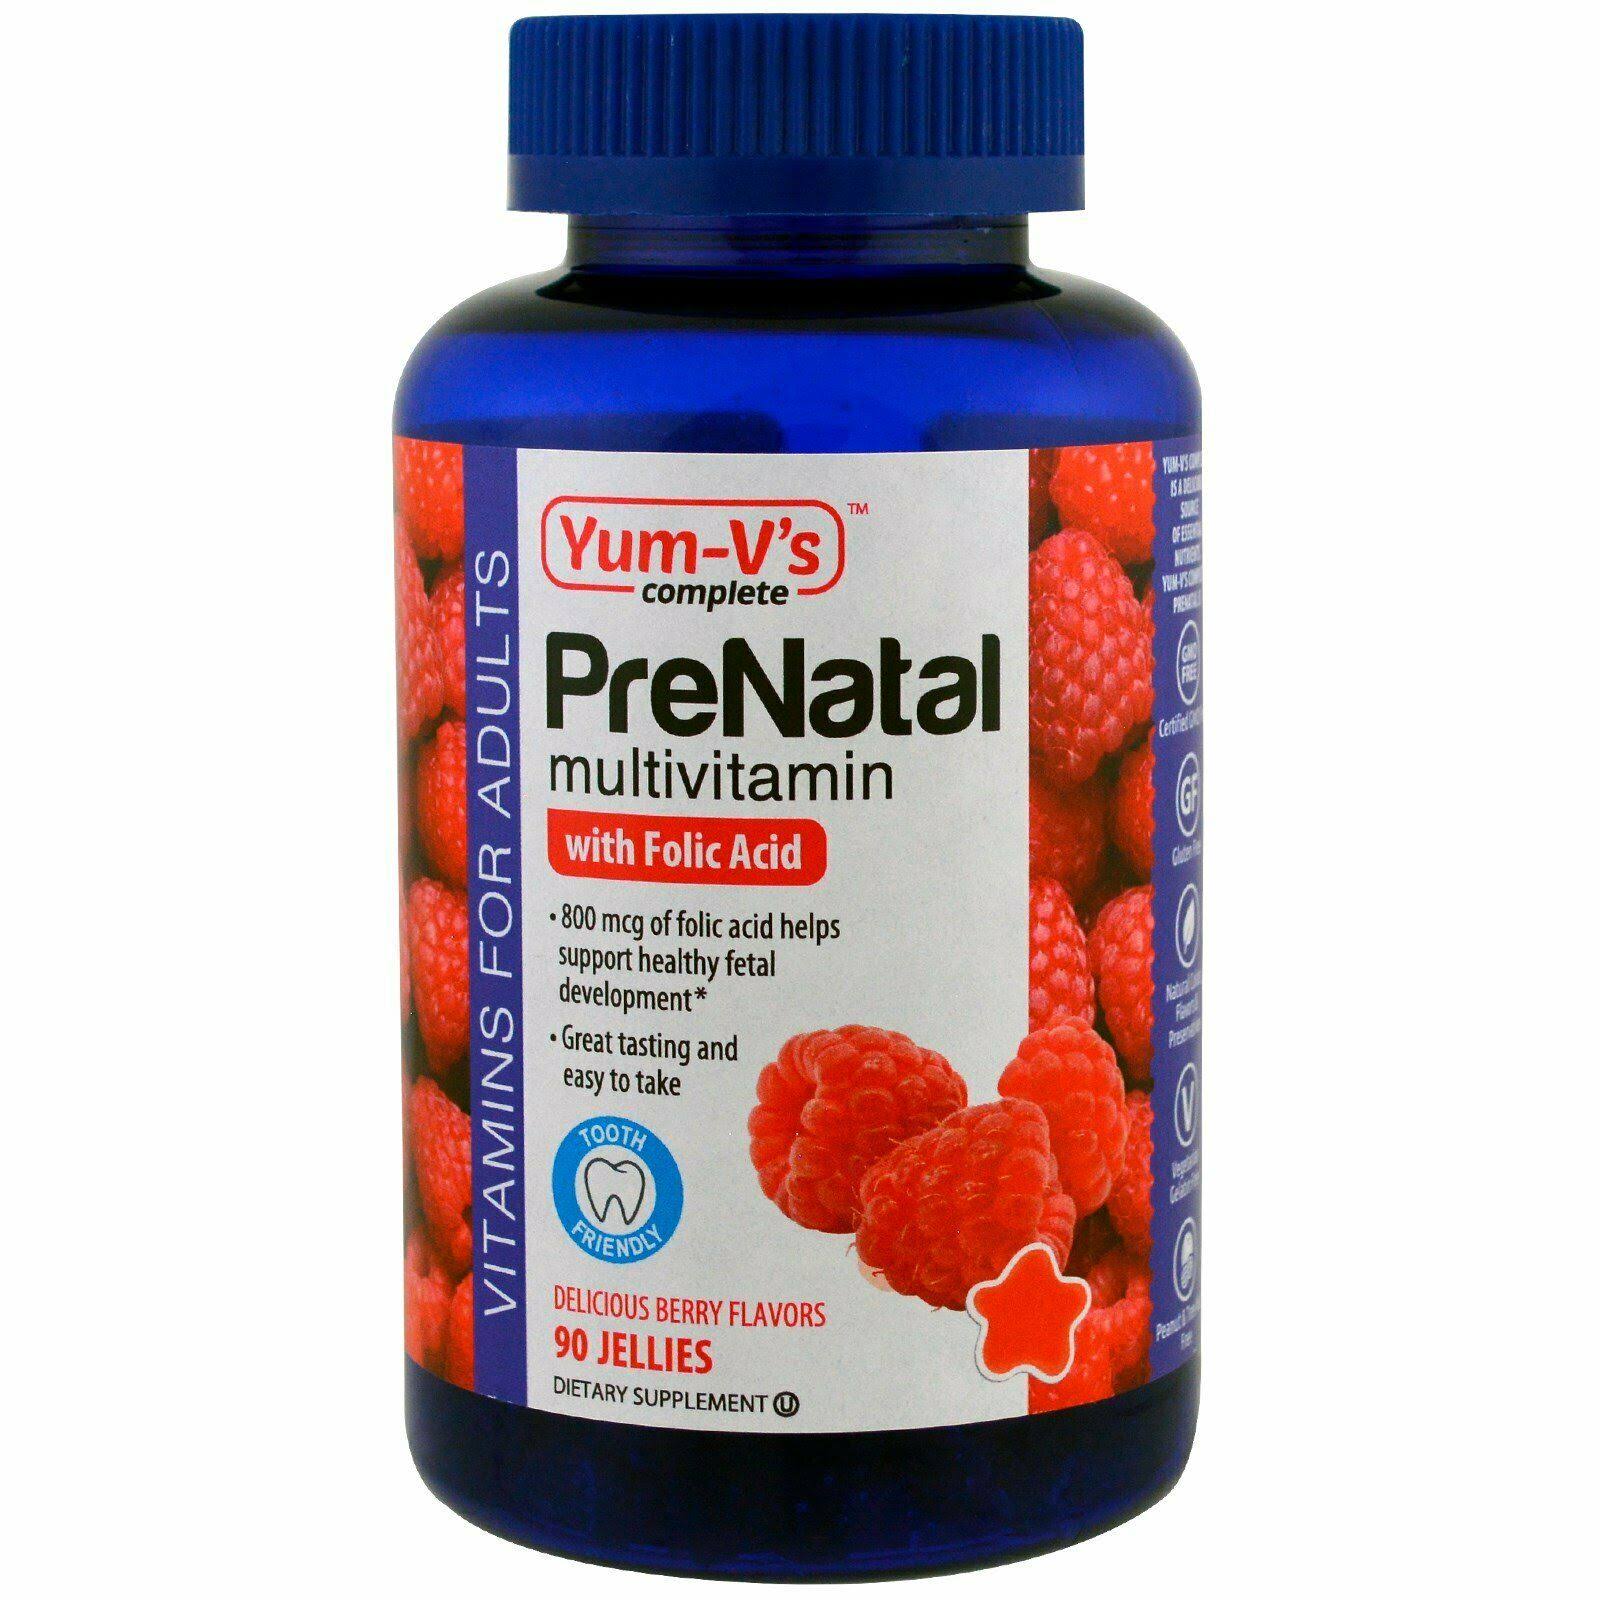 Yum-V's Prenatal Multivitamin Supplement - with Folic Acid, Berry, 90ct